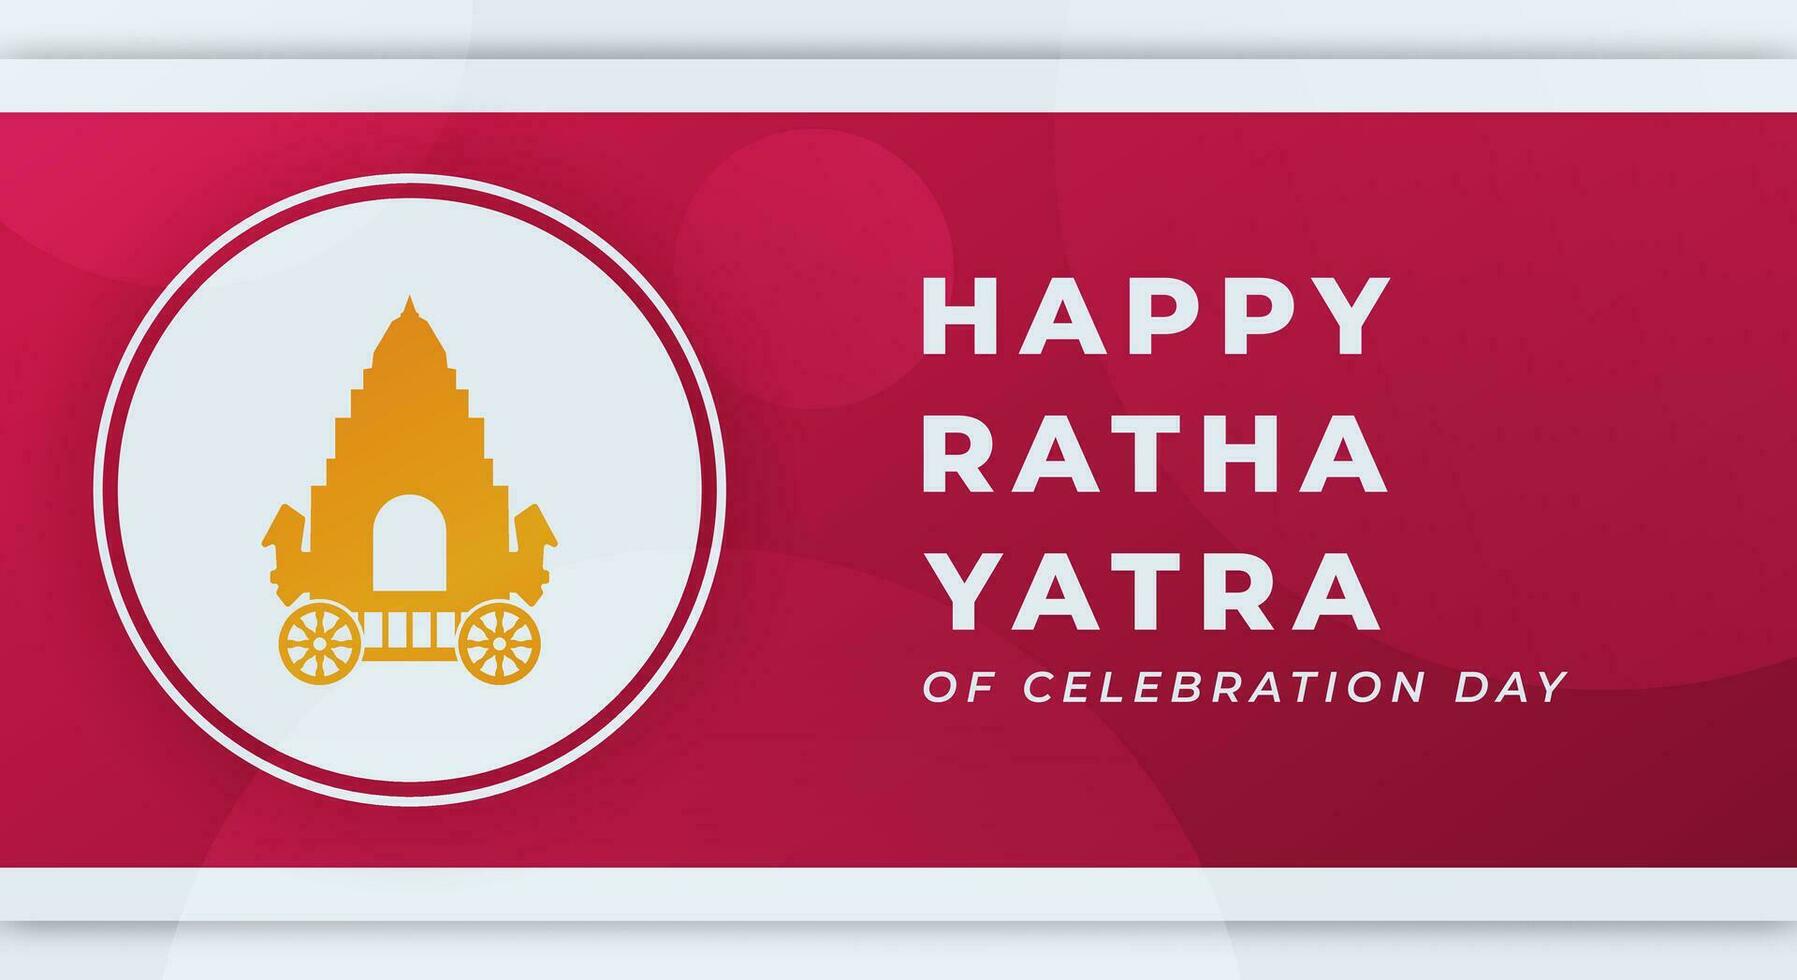 Happy Ratha Yatra Celebration Vector Design Illustration for Background, Poster, Banner, Advertising, Greeting Card